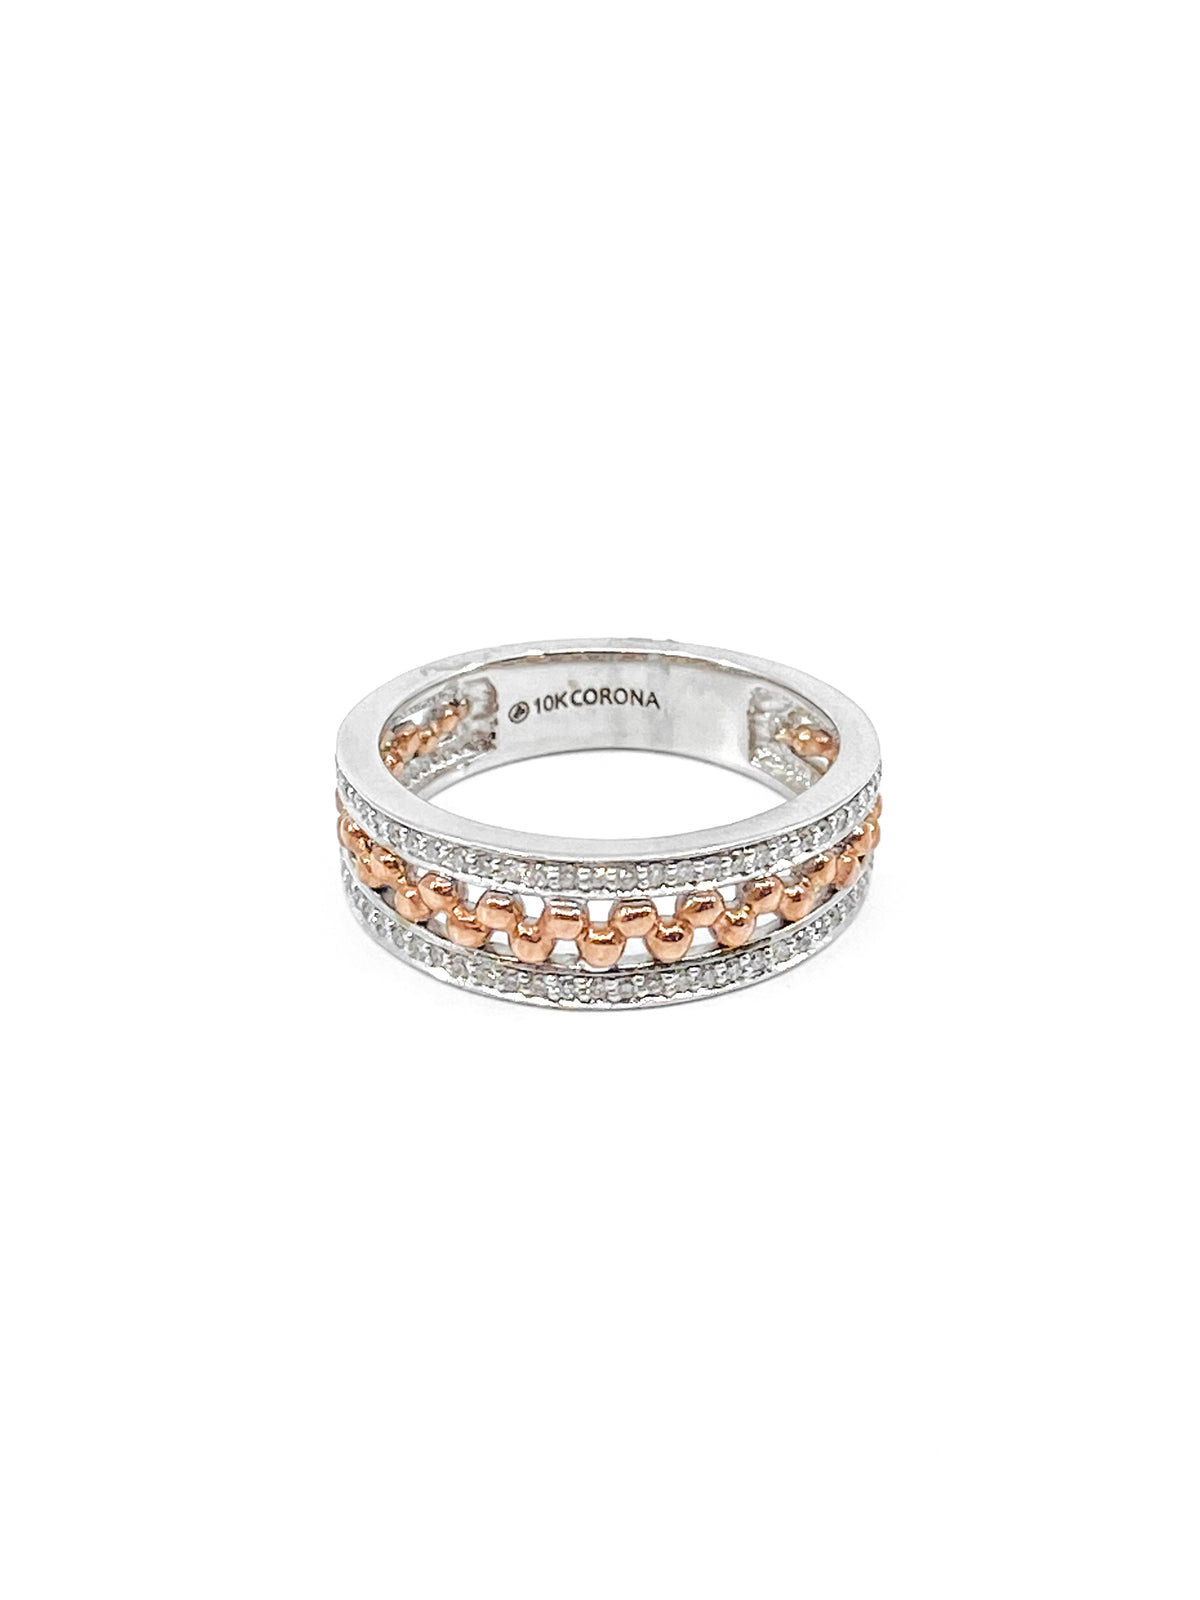 10K White &amp; Rose Gold 0.18cttw Diamond Ring, size 6.5